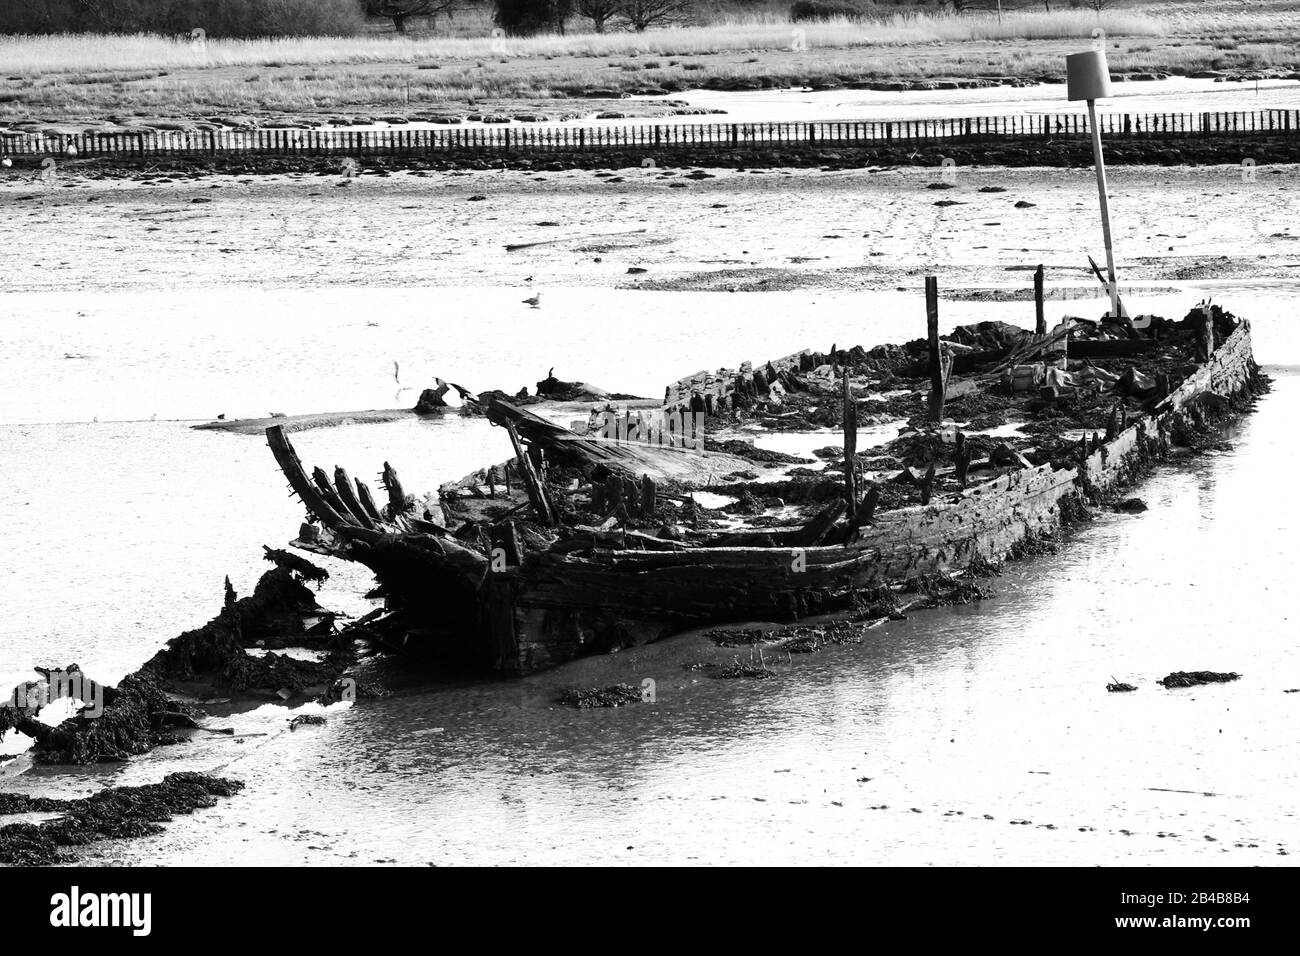 Woodbridge, Suffolk, UK - 6 March 2020: Boat wreck in the river Deben between Melton and Woodbridge. Stock Photo